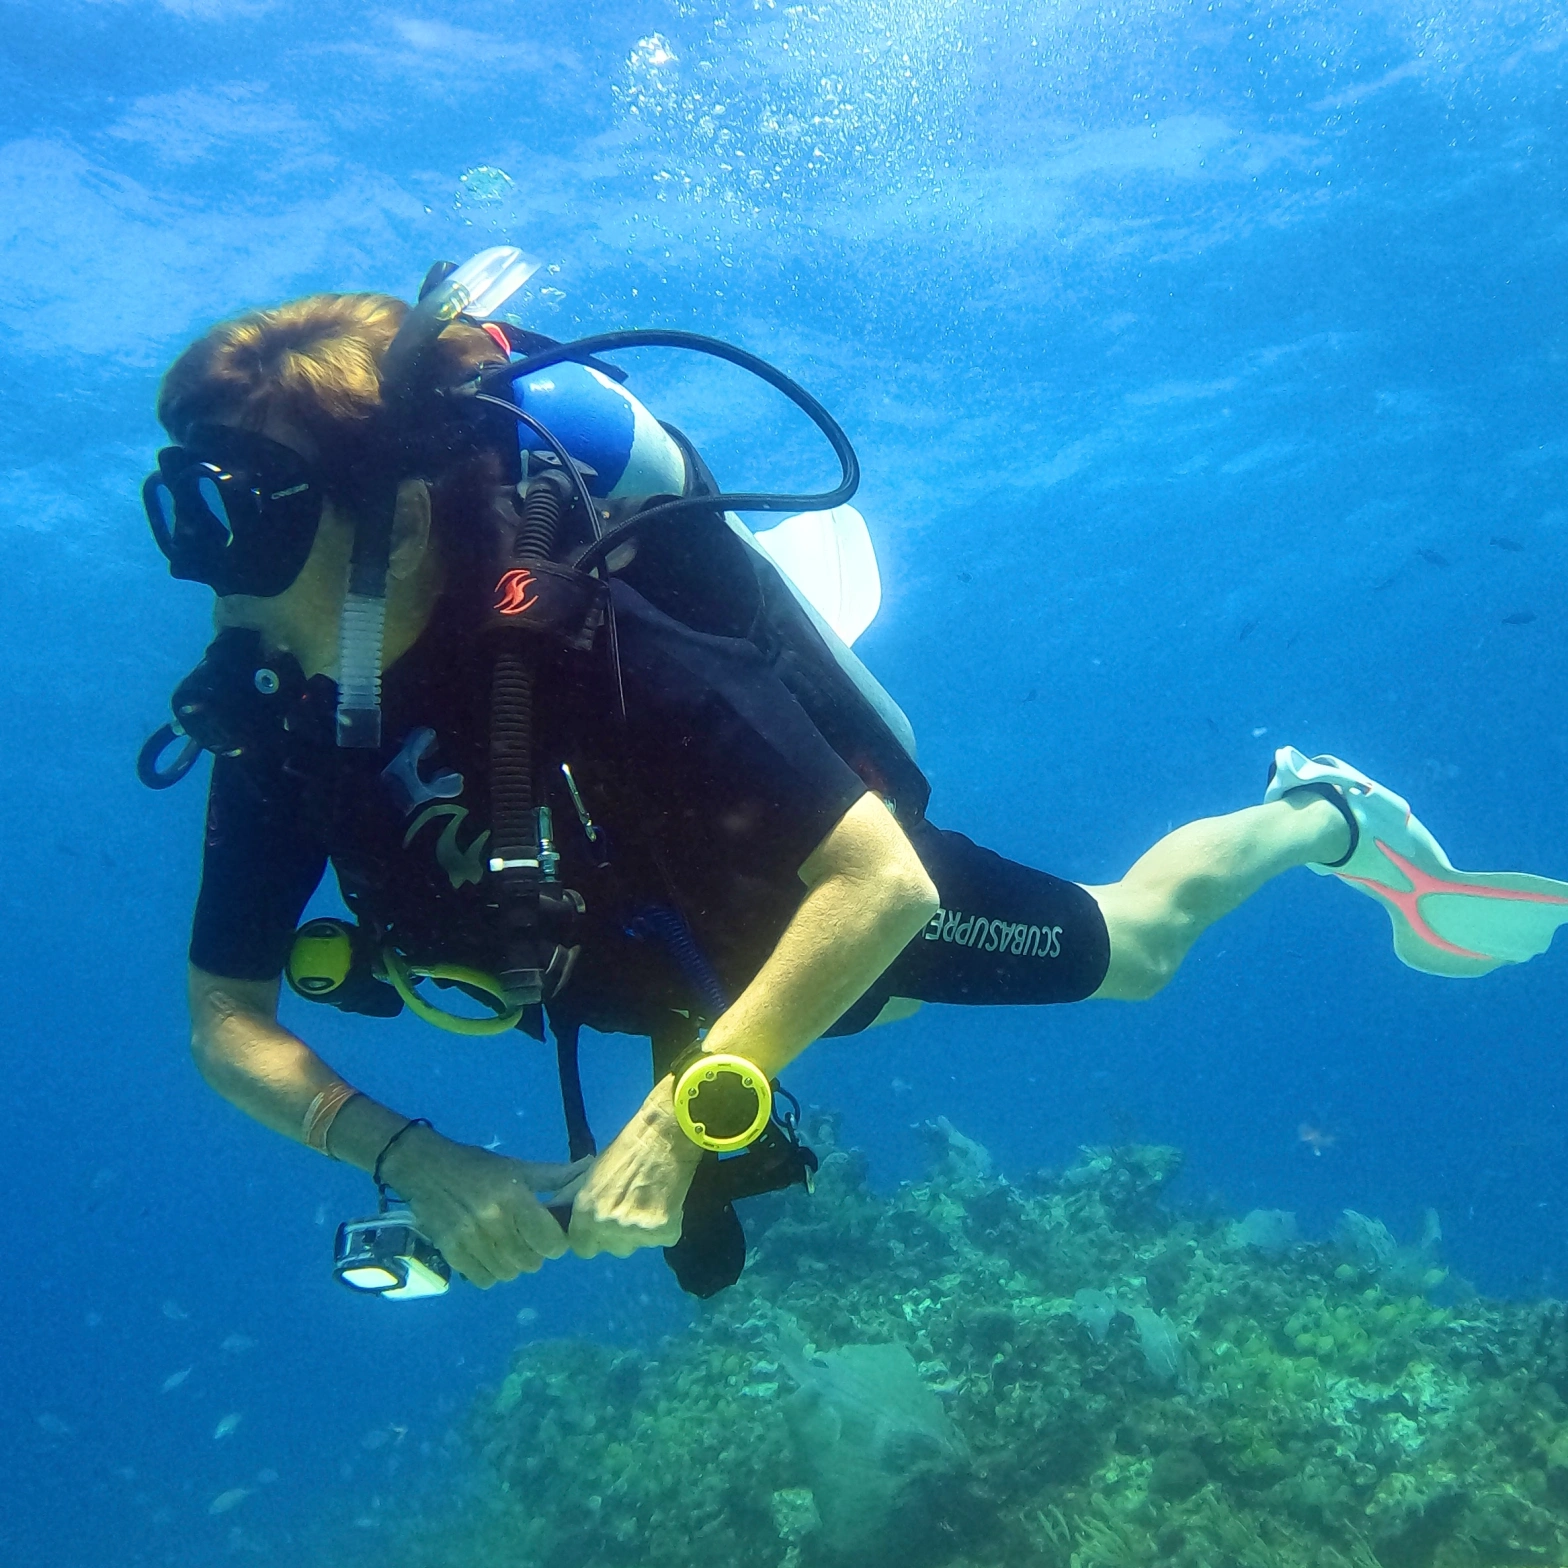 15 best practice tips to become a confident senior scuba diver – A